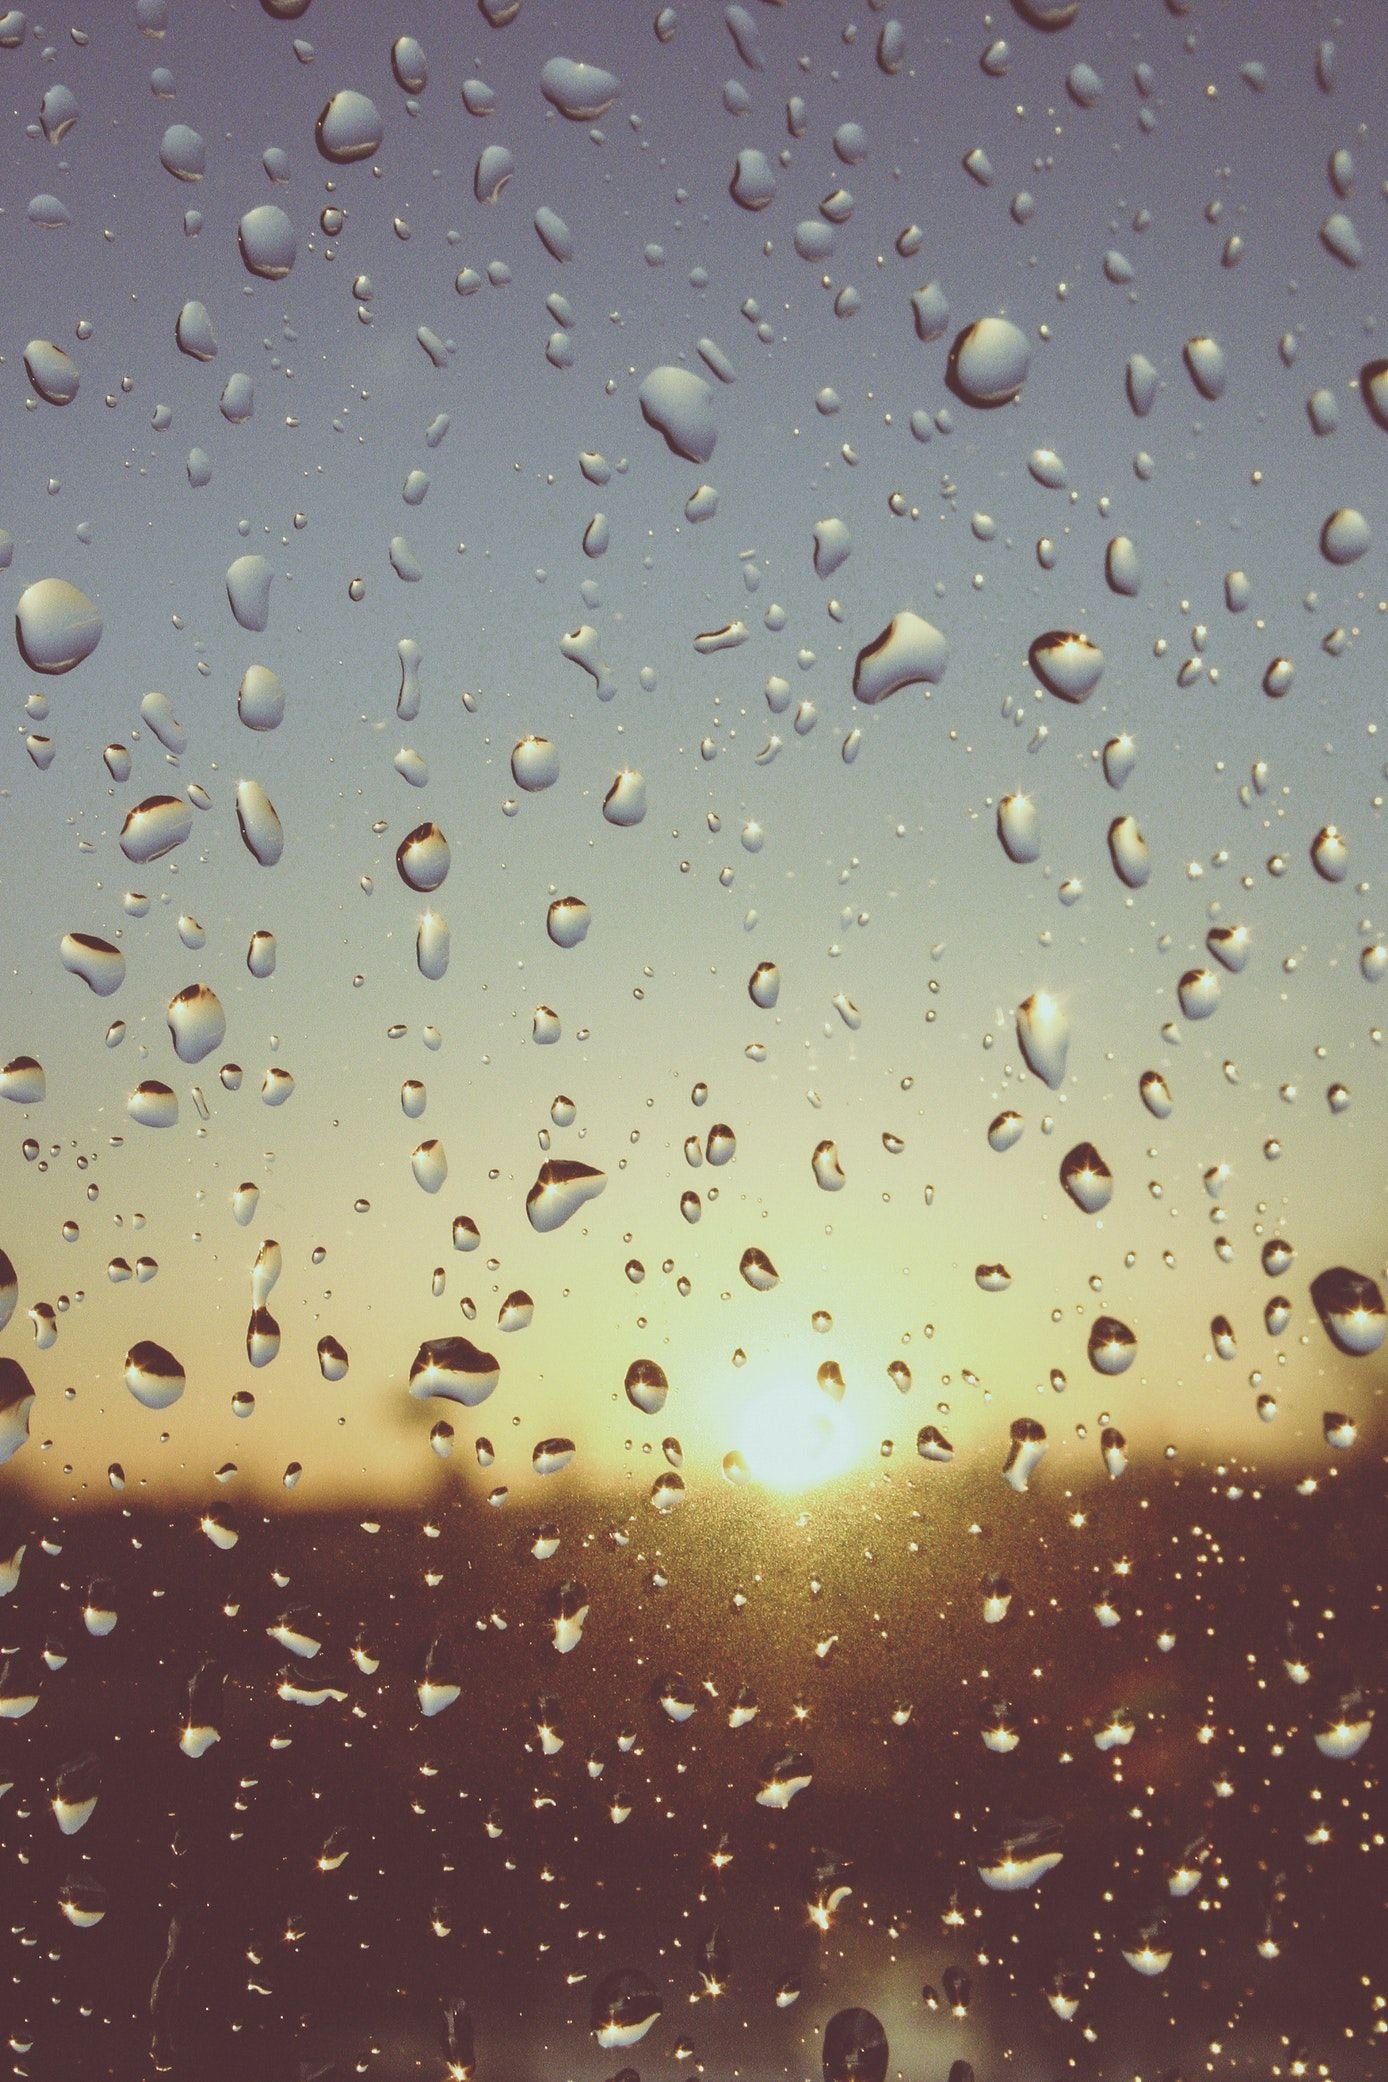 1388x2082 Raindrops on window pane | free image by / Markus Spiske | Rainy day photography, Rain wallpapers, Rain drops on window